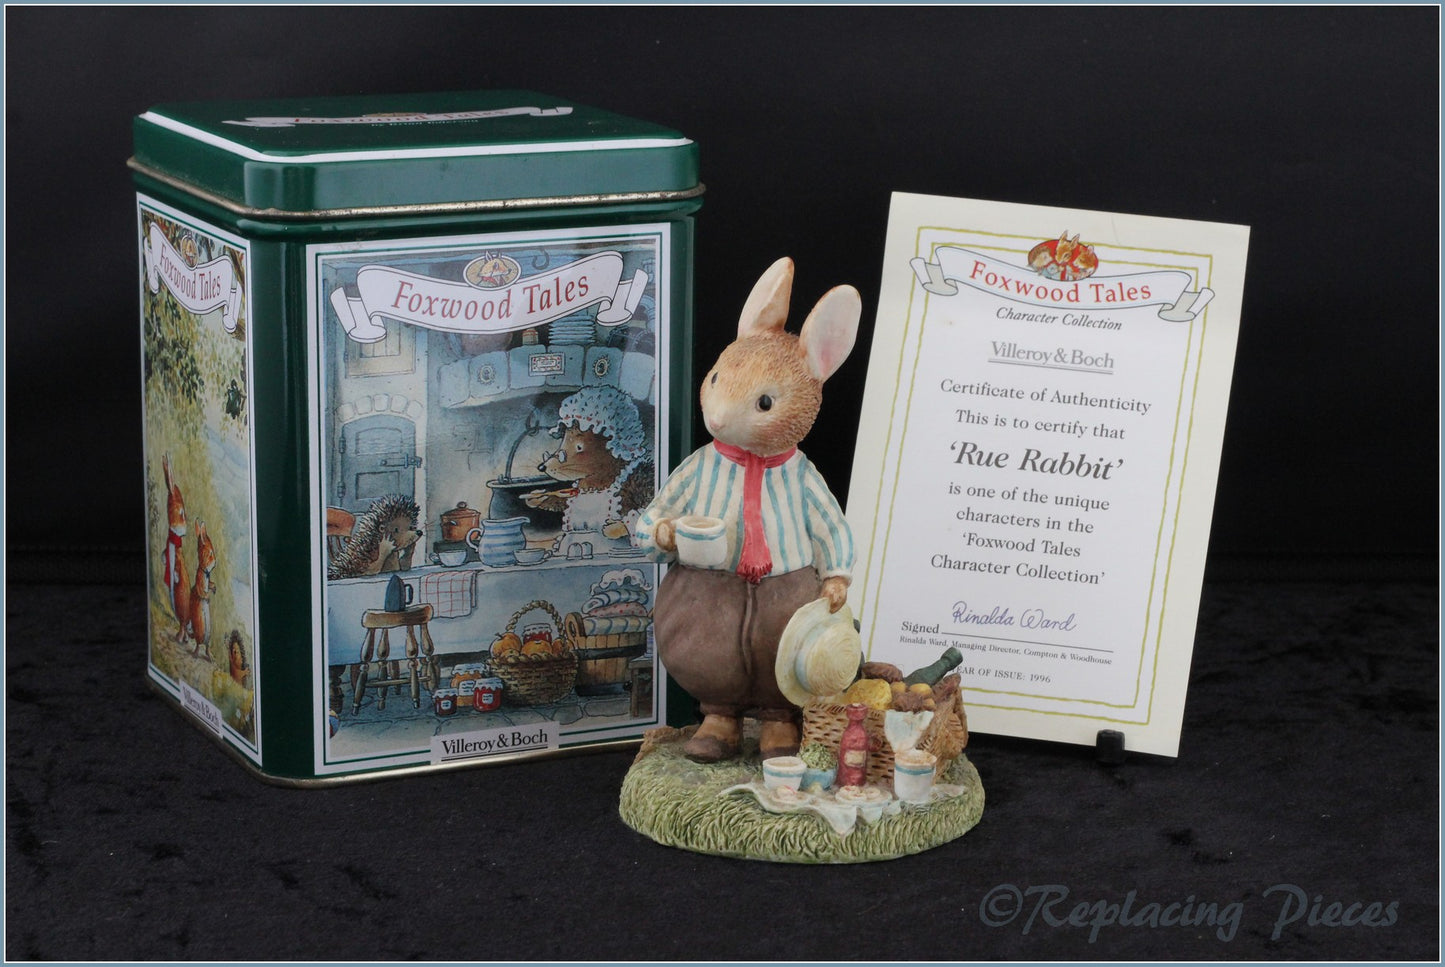 Villeroy & Boch - Foxwood Tales Figurines - No.1 Rue Rabbit